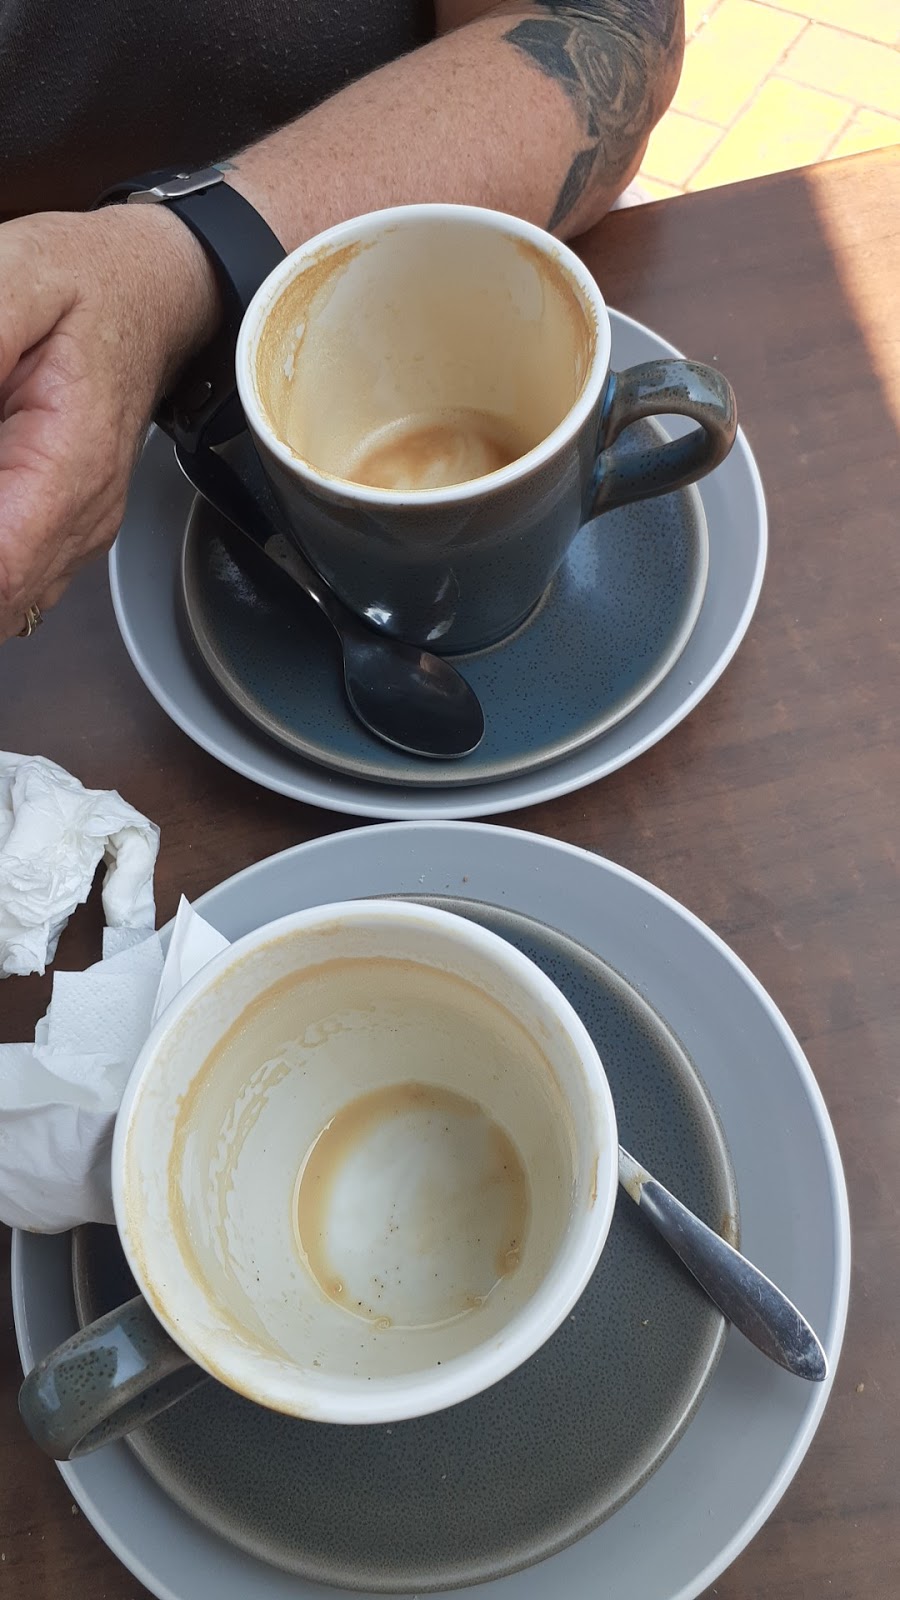 Beljays Cafe | cafe | 25 Wharf St, Forster NSW 2428, Australia